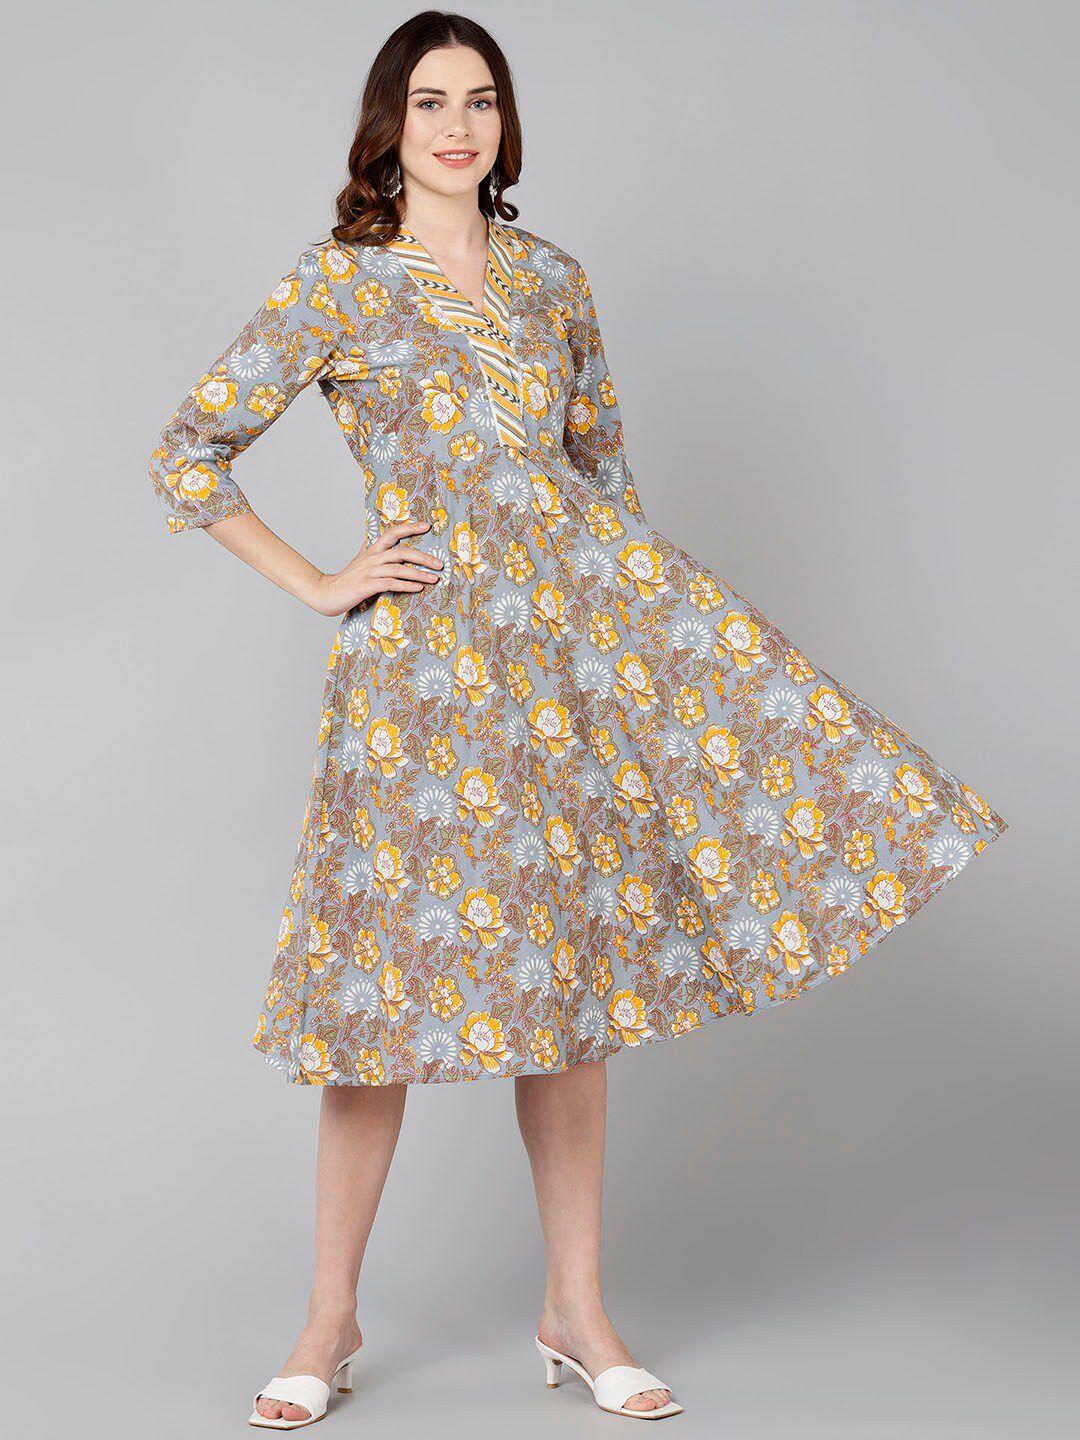 znx clothing women yellow & brown floral midi dress